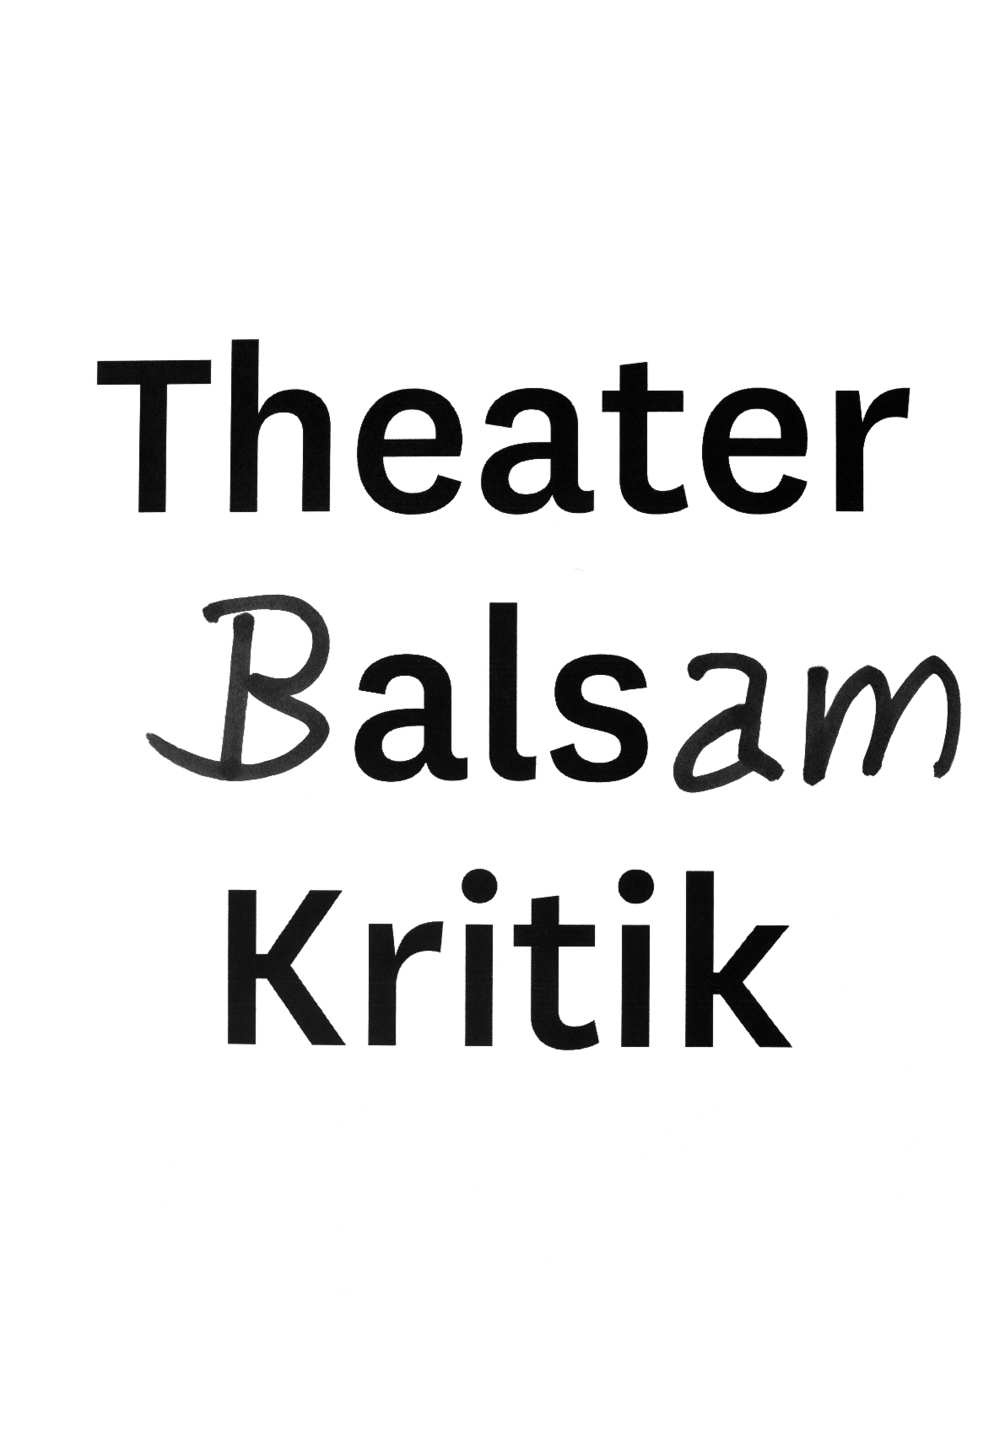 theater-as-critique-slip-18-1005x1435px